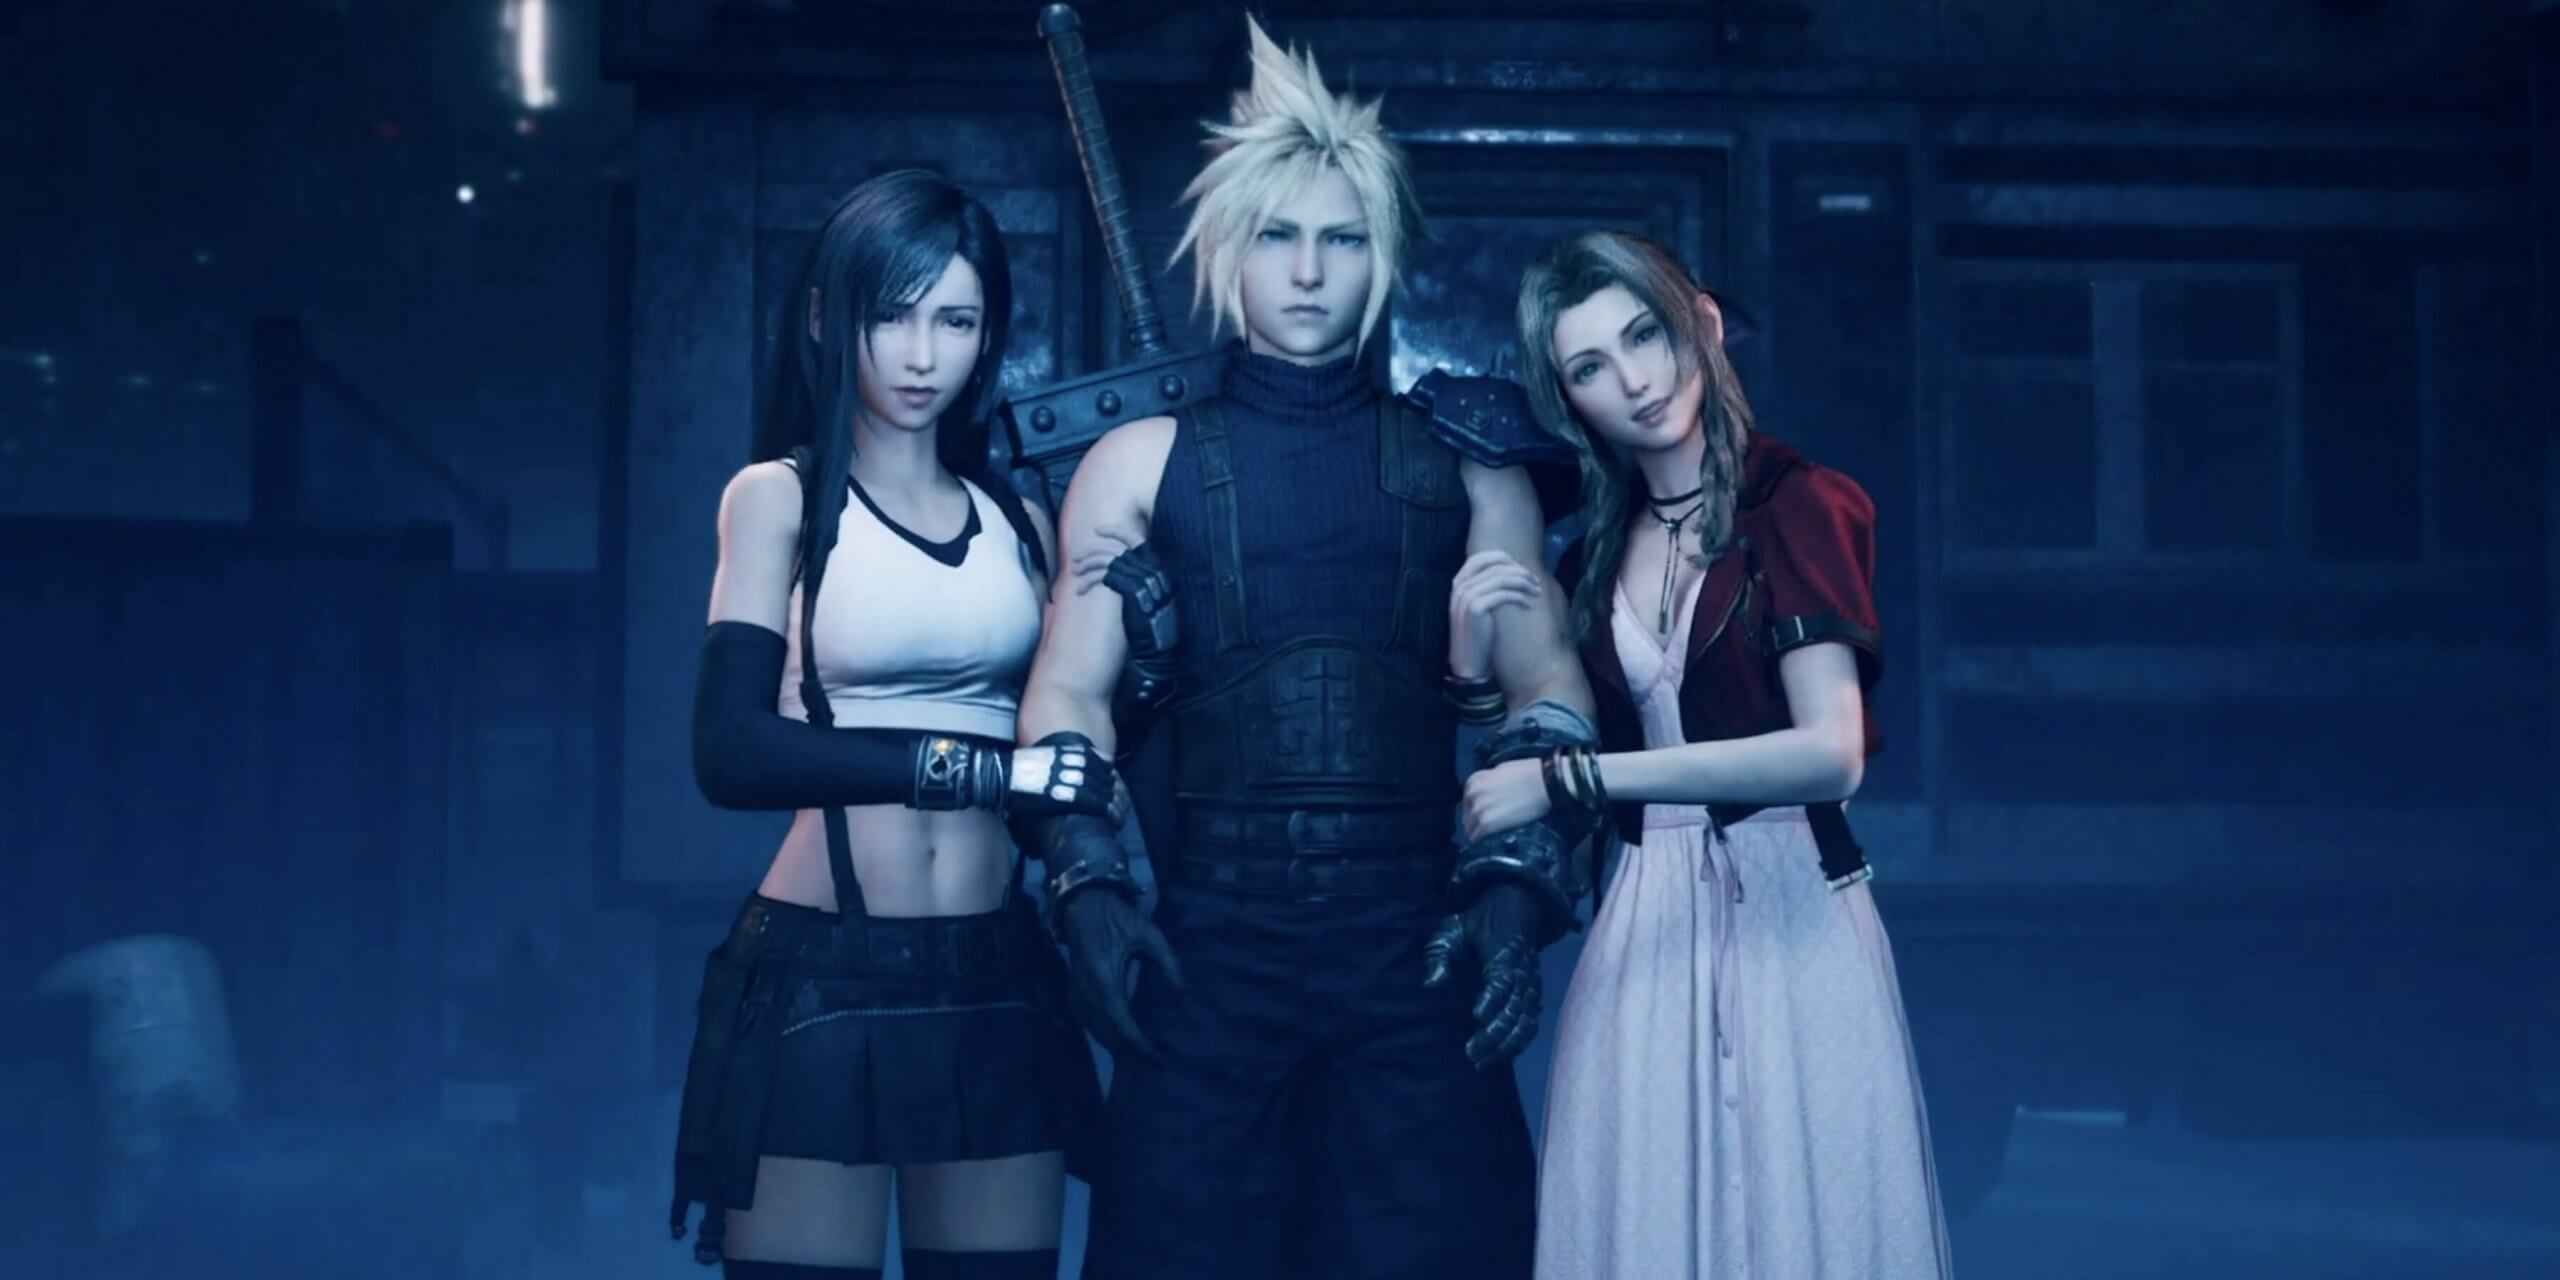 Cloud, Tifa, and Aerith in Final Fantasy VII